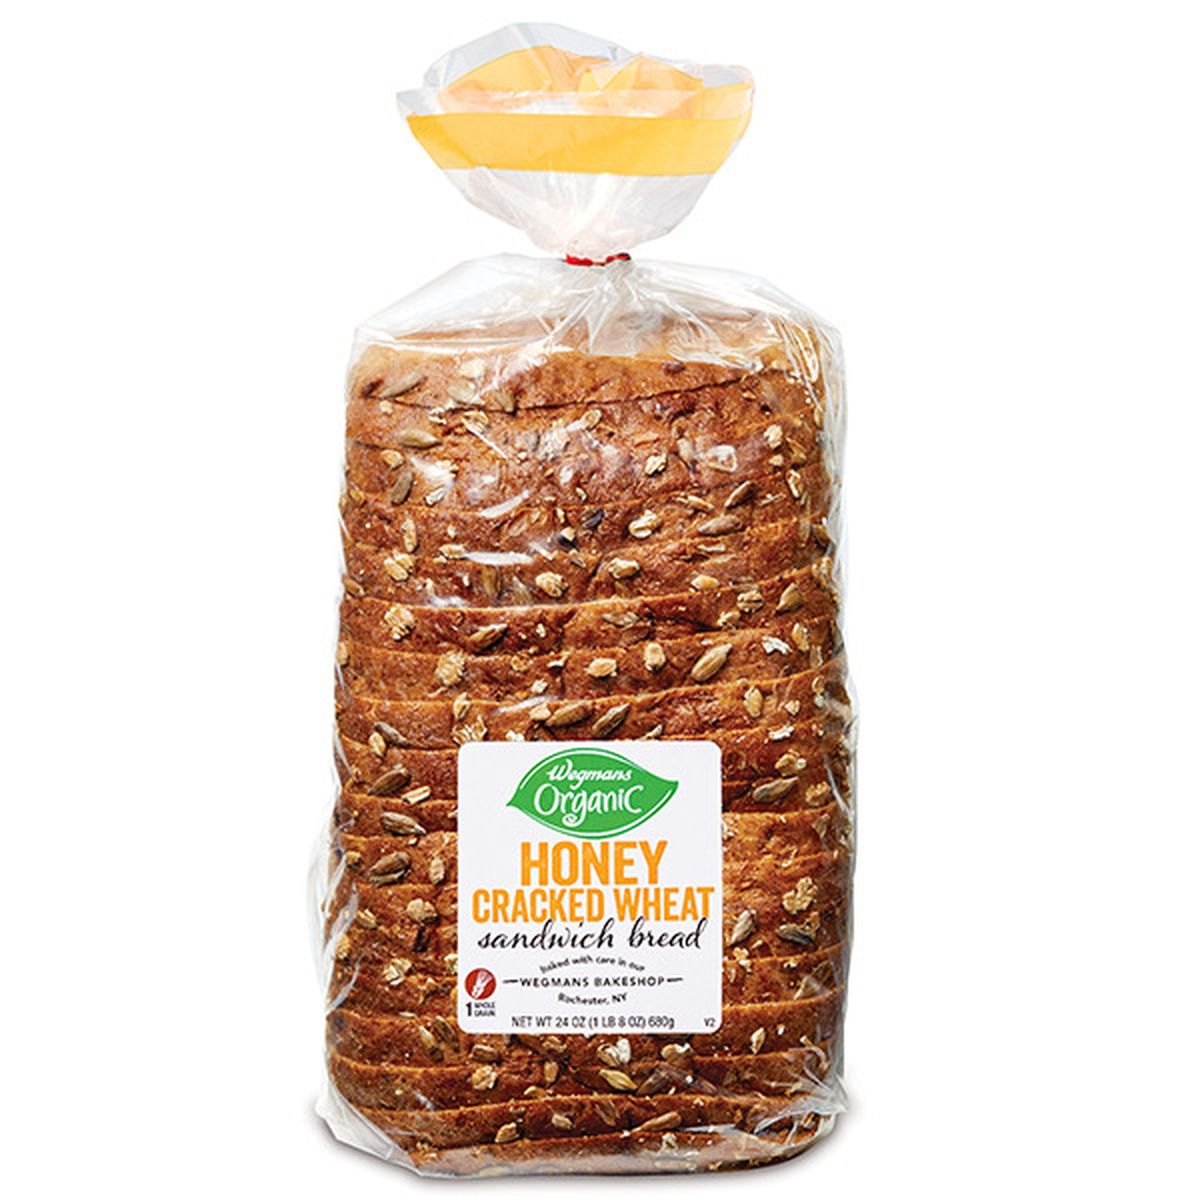 Calories in Wegmans Organic Honey Cracked Wheat Sandwich Bread